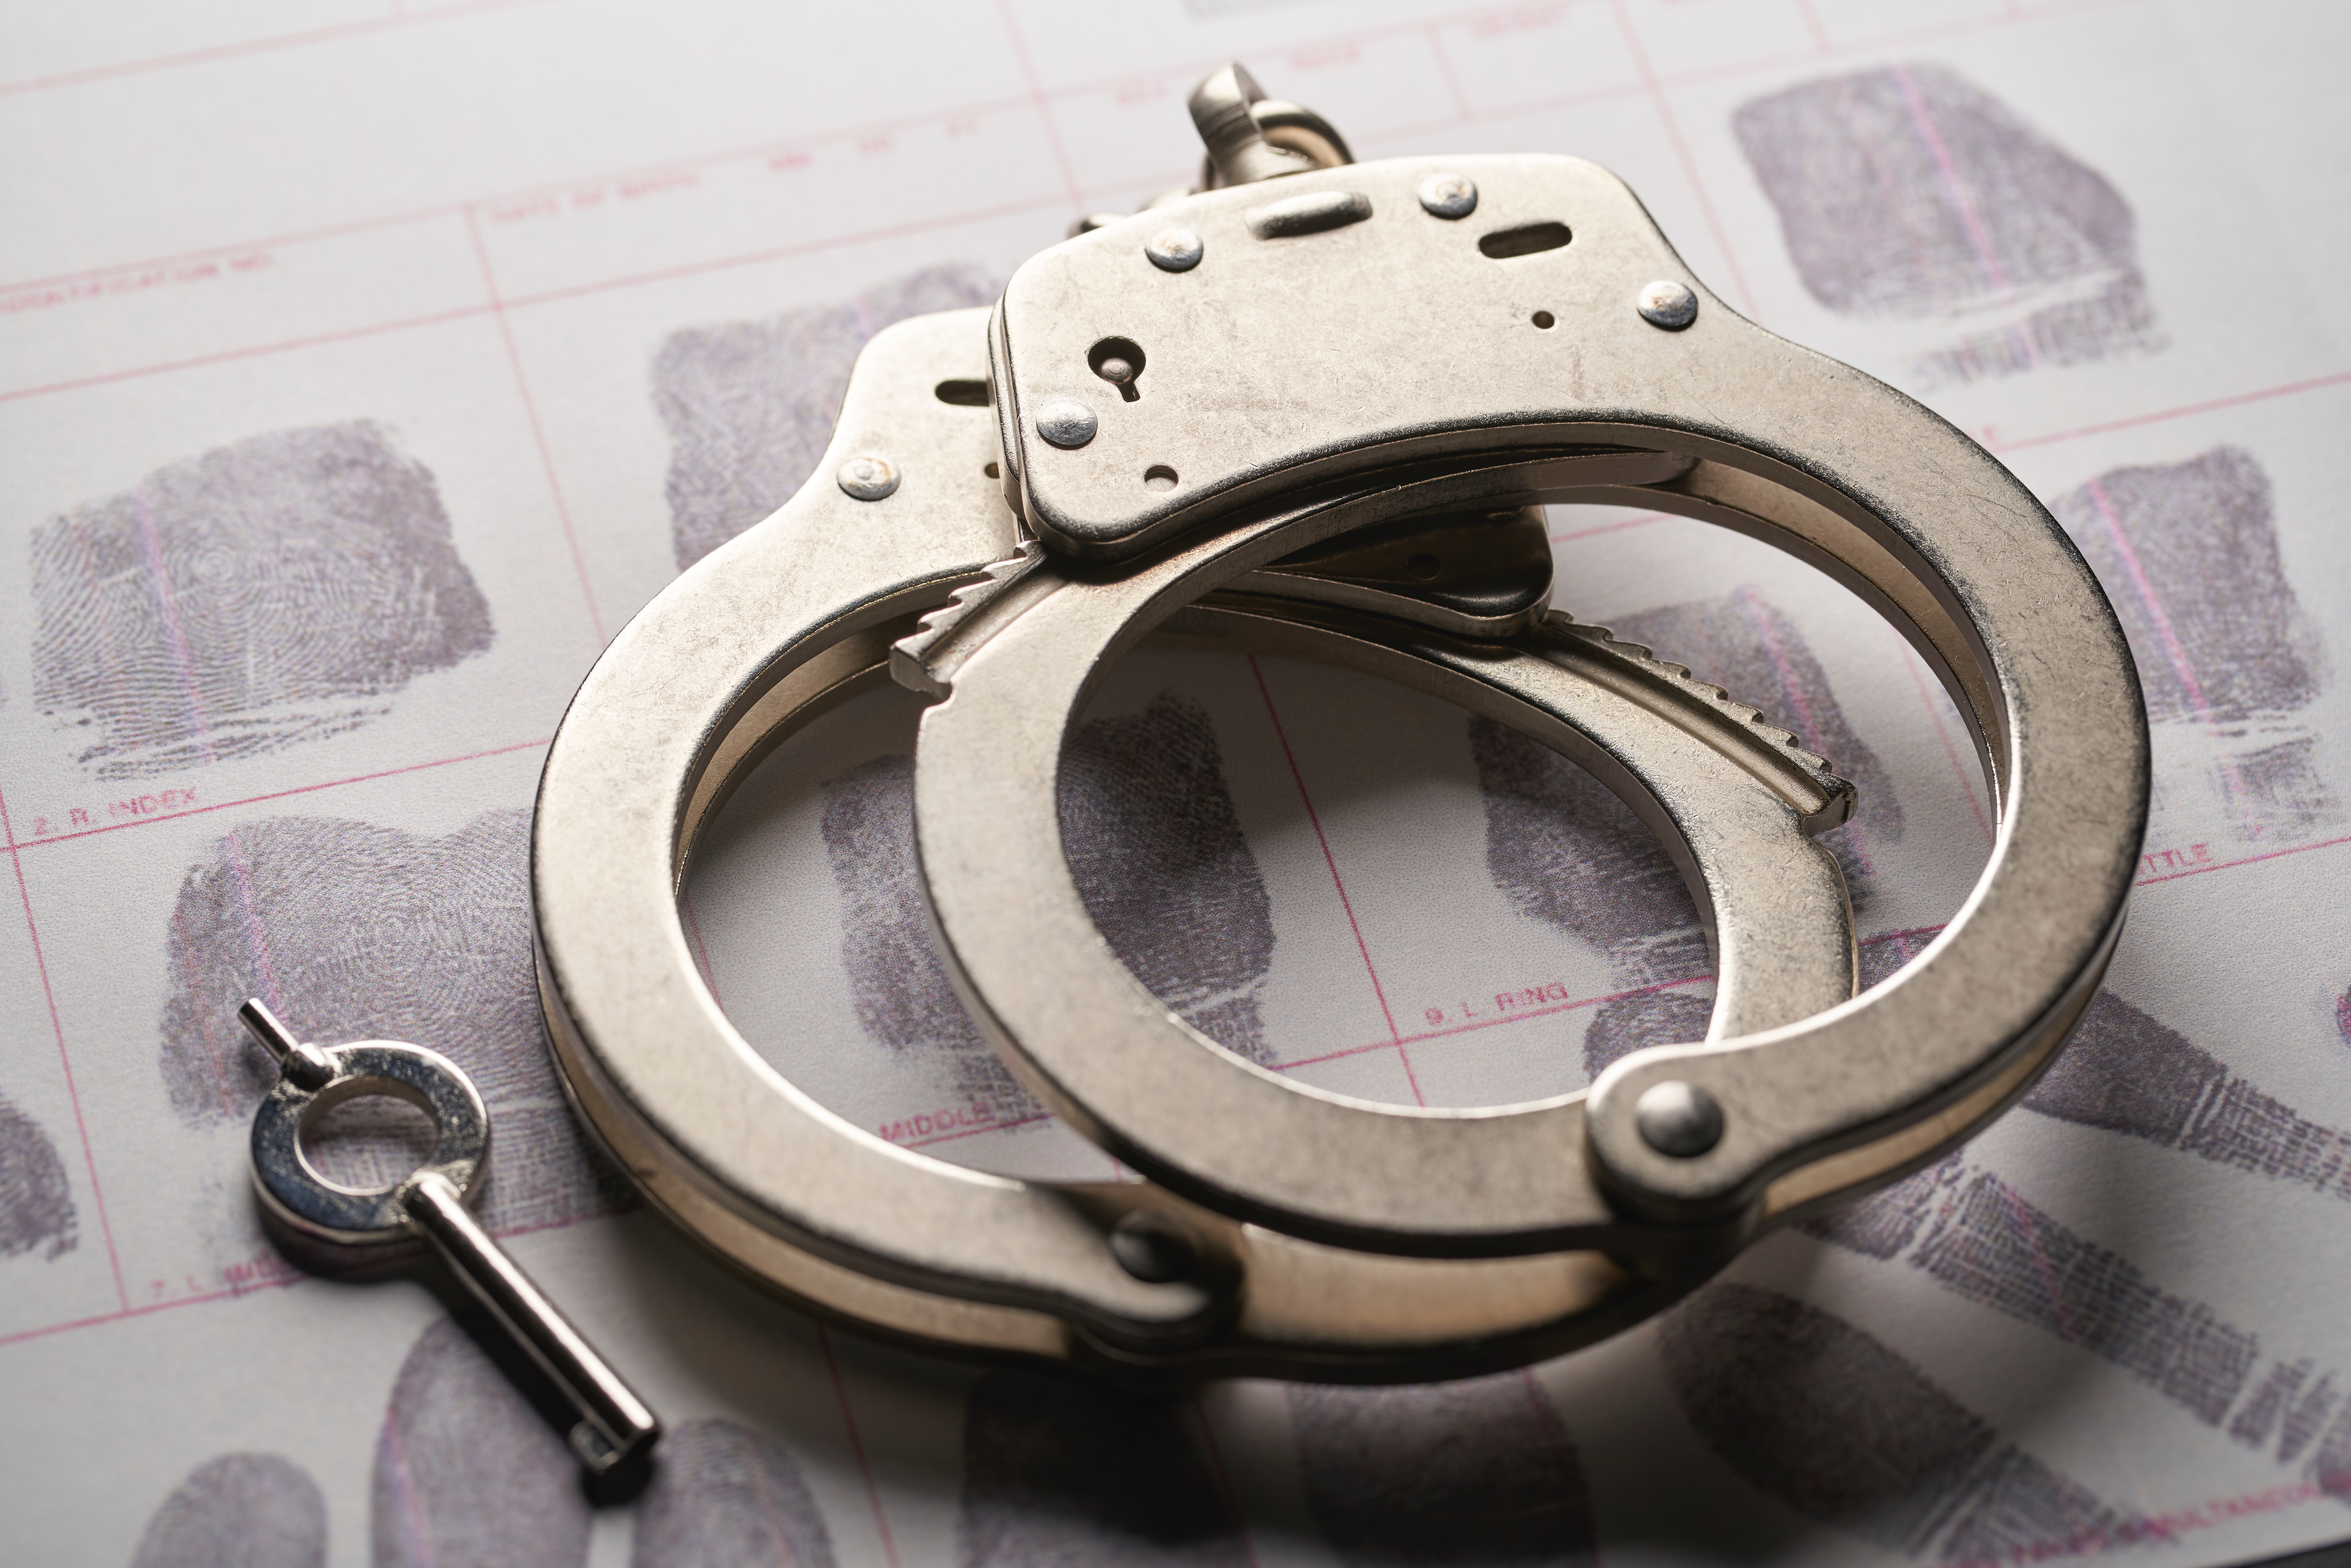 arrested in arizona - handcuffs